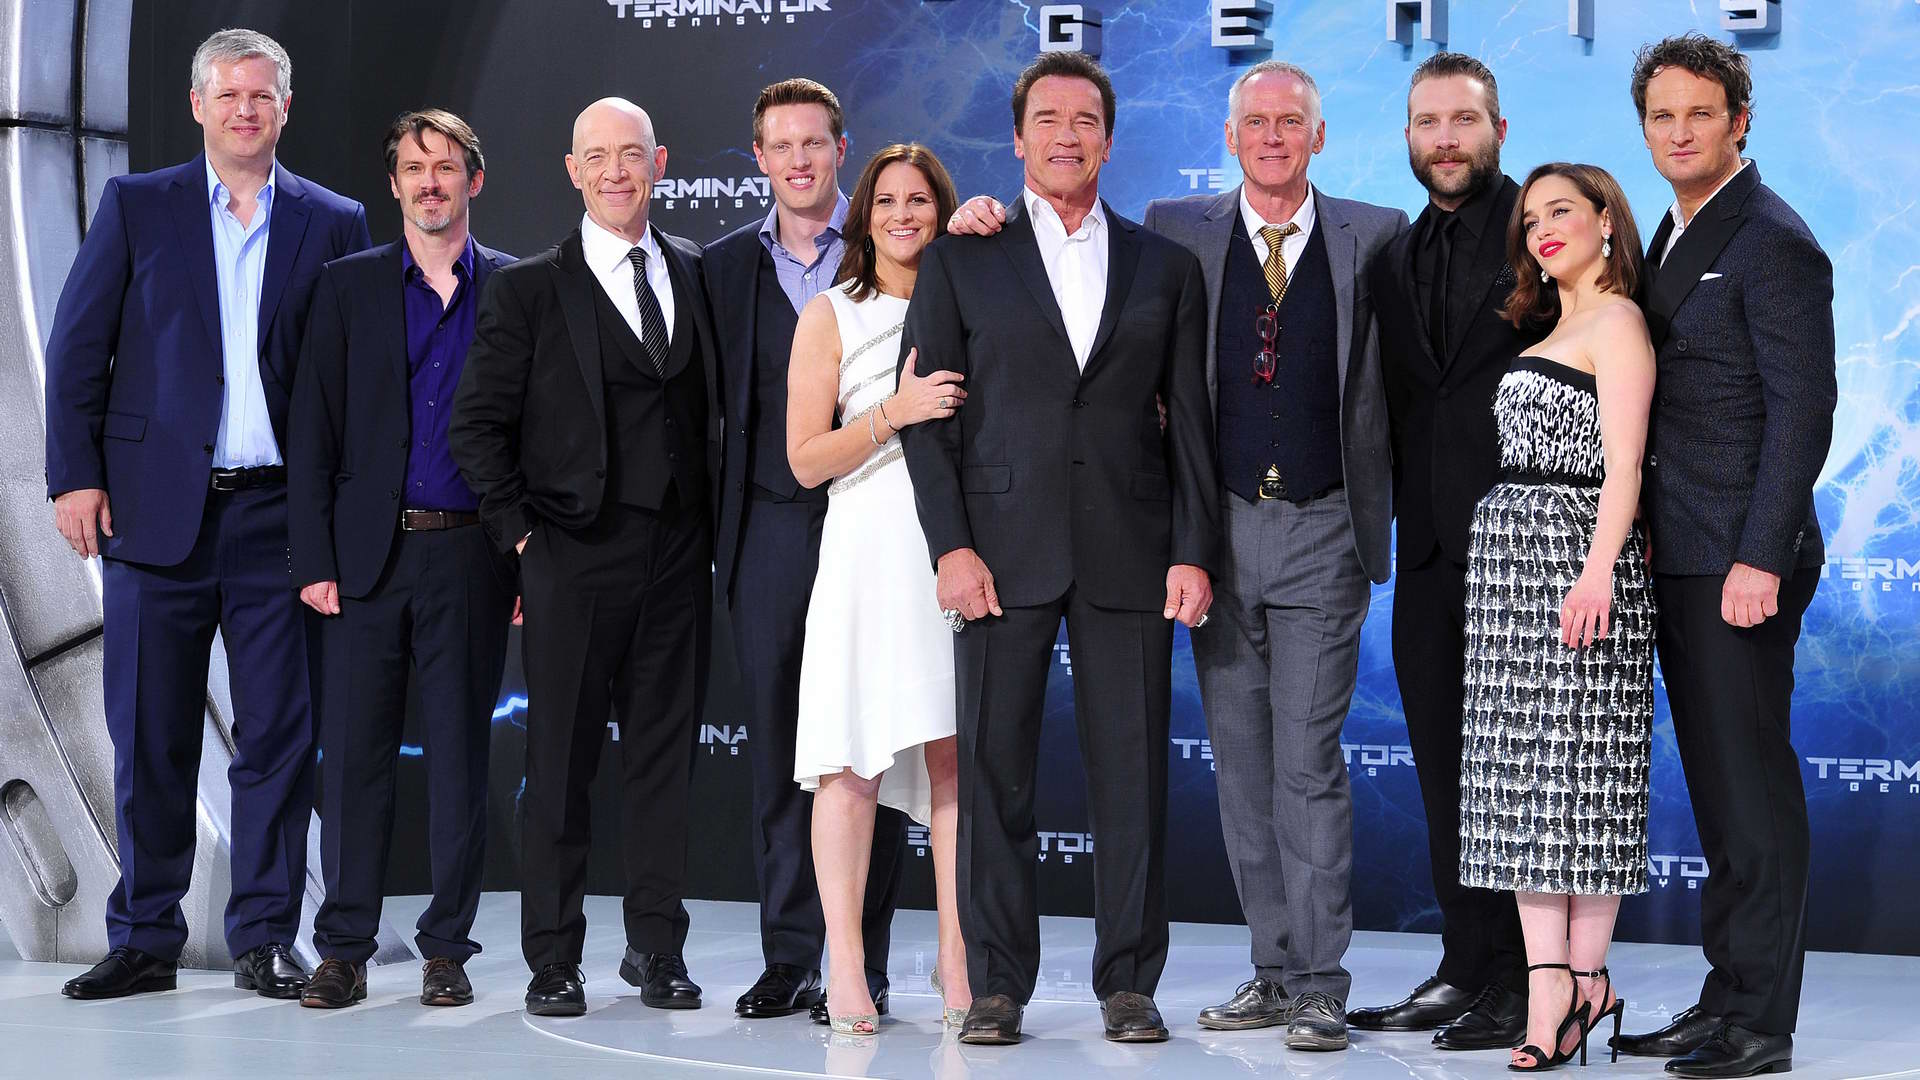 Cast Cast  -  Premiere TERMINATOR - GENISYS im Cinestar im Sonycenter  in Berlin  am 21.06.2015 -  Foto: SuccoMedia / Ralf Succo  